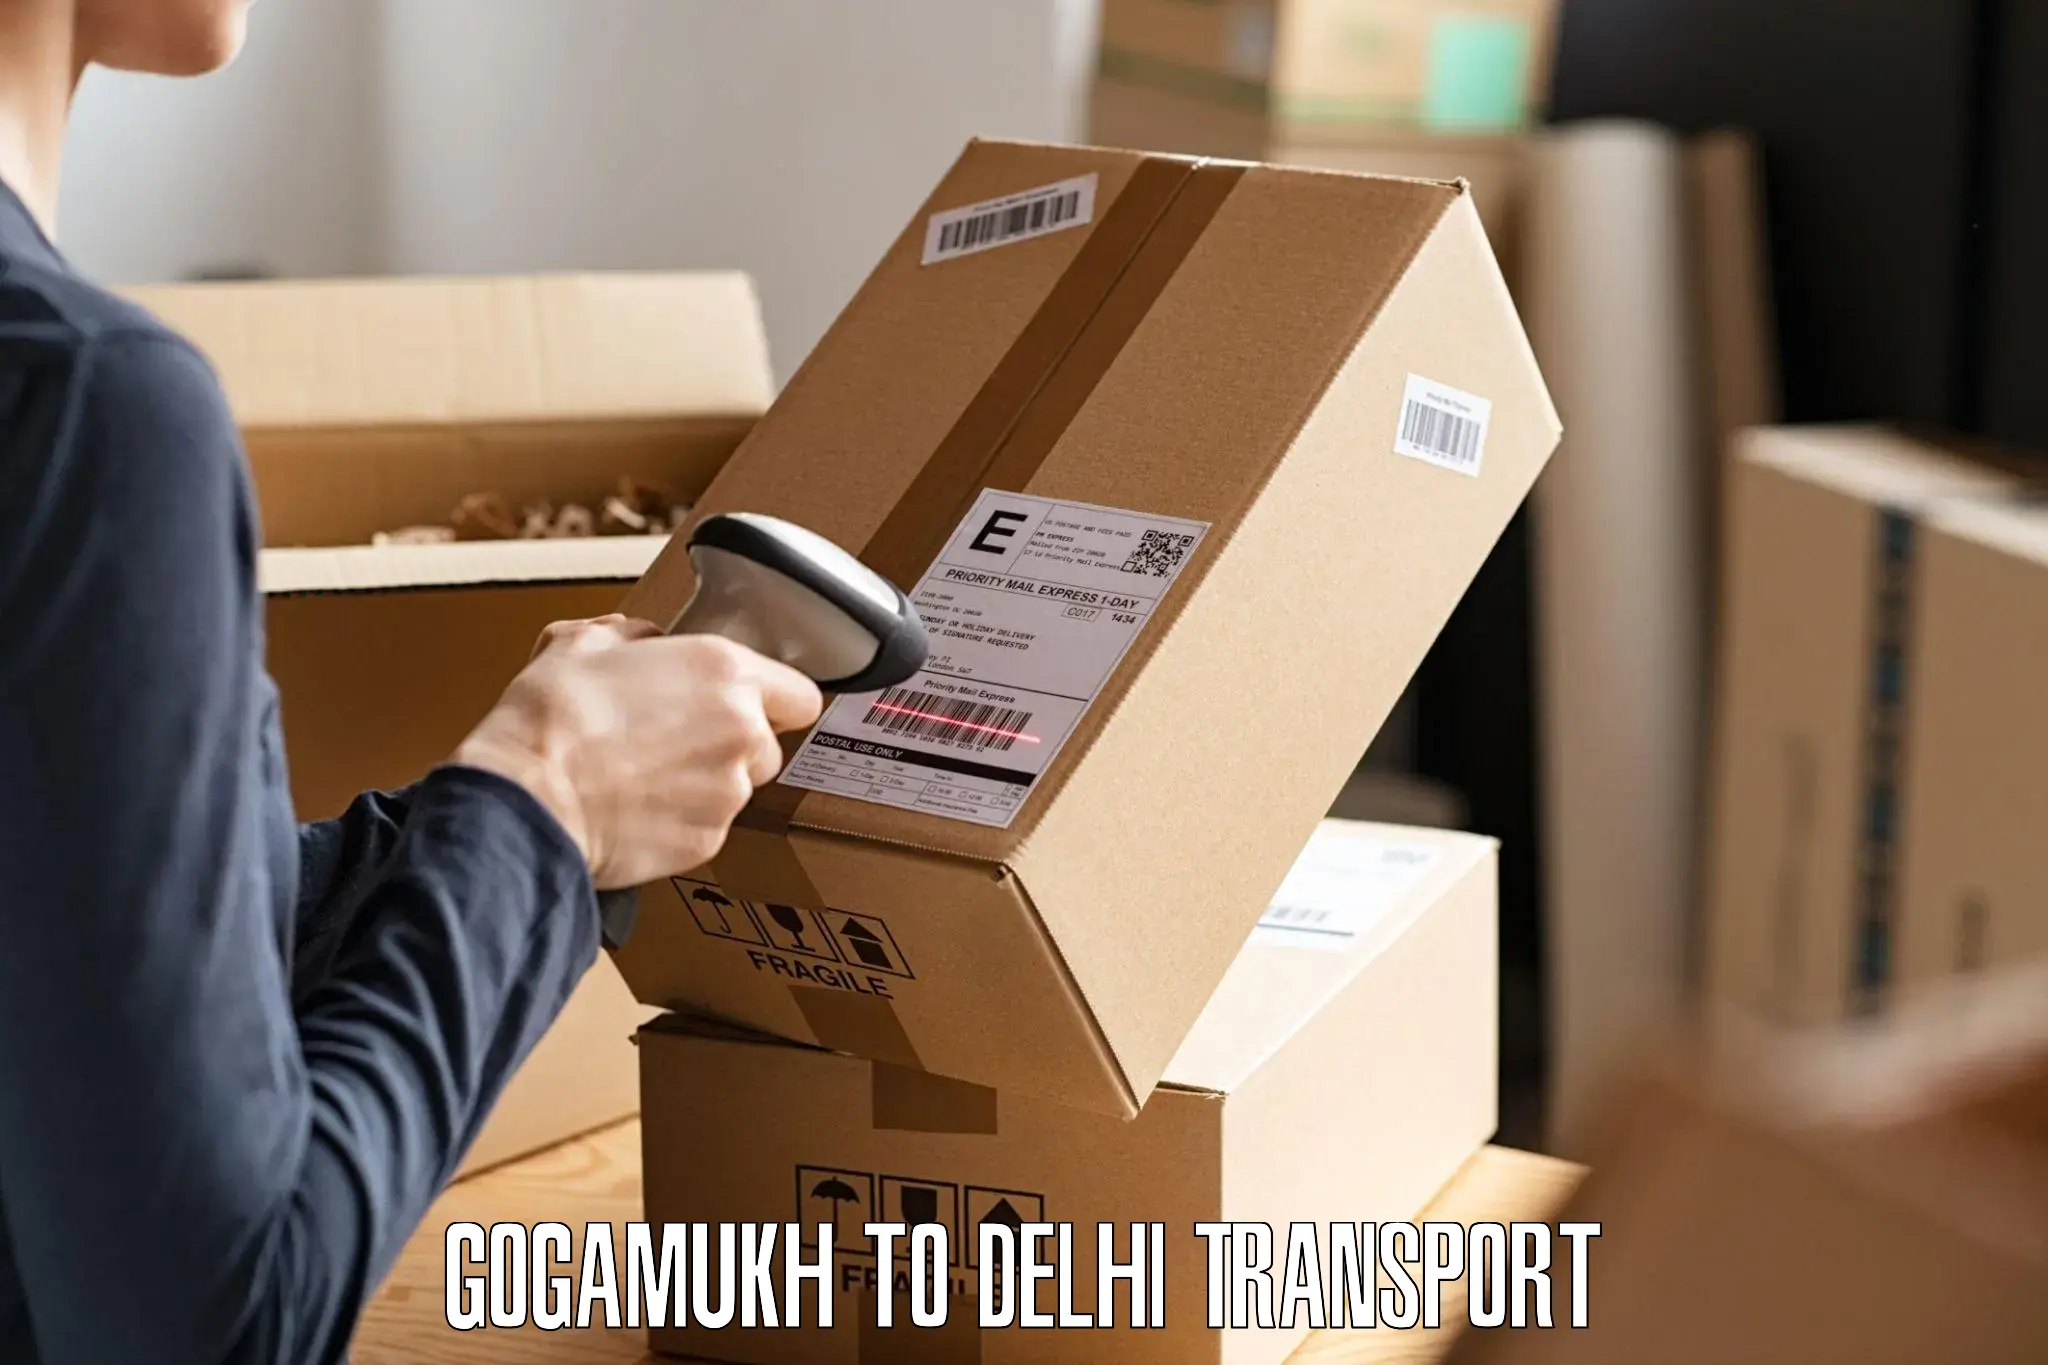 Nearest transport service Gogamukh to Delhi